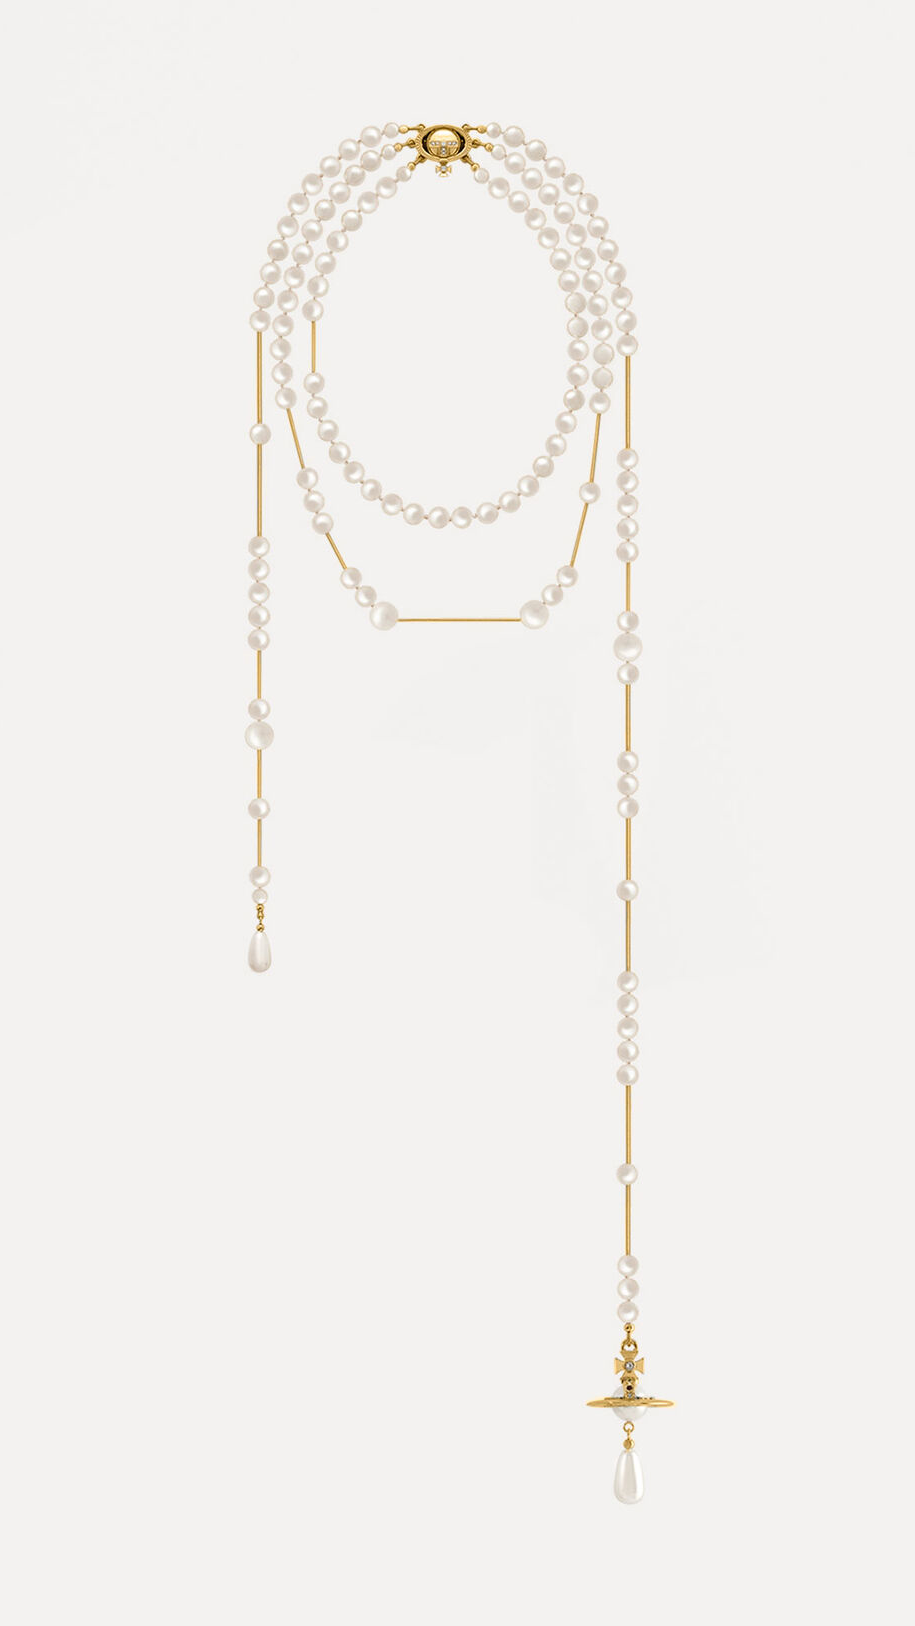 Repair a Broken Pearl Necklace String | Hometalk